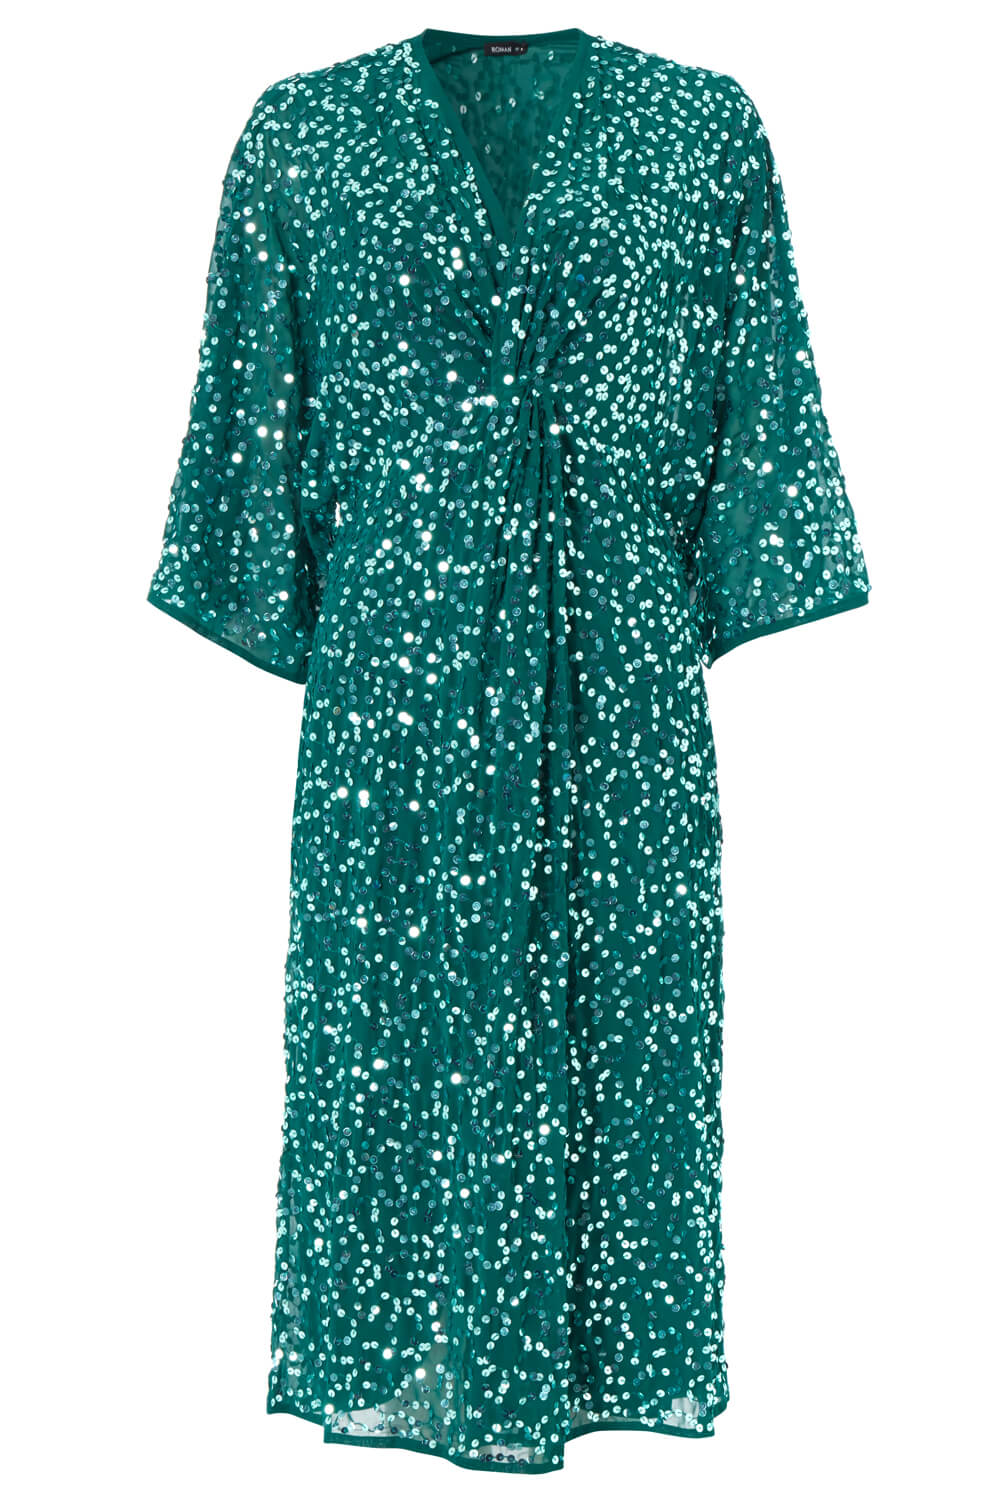 Green Twist Front Sequin Midi Dress, Image 4 of 4